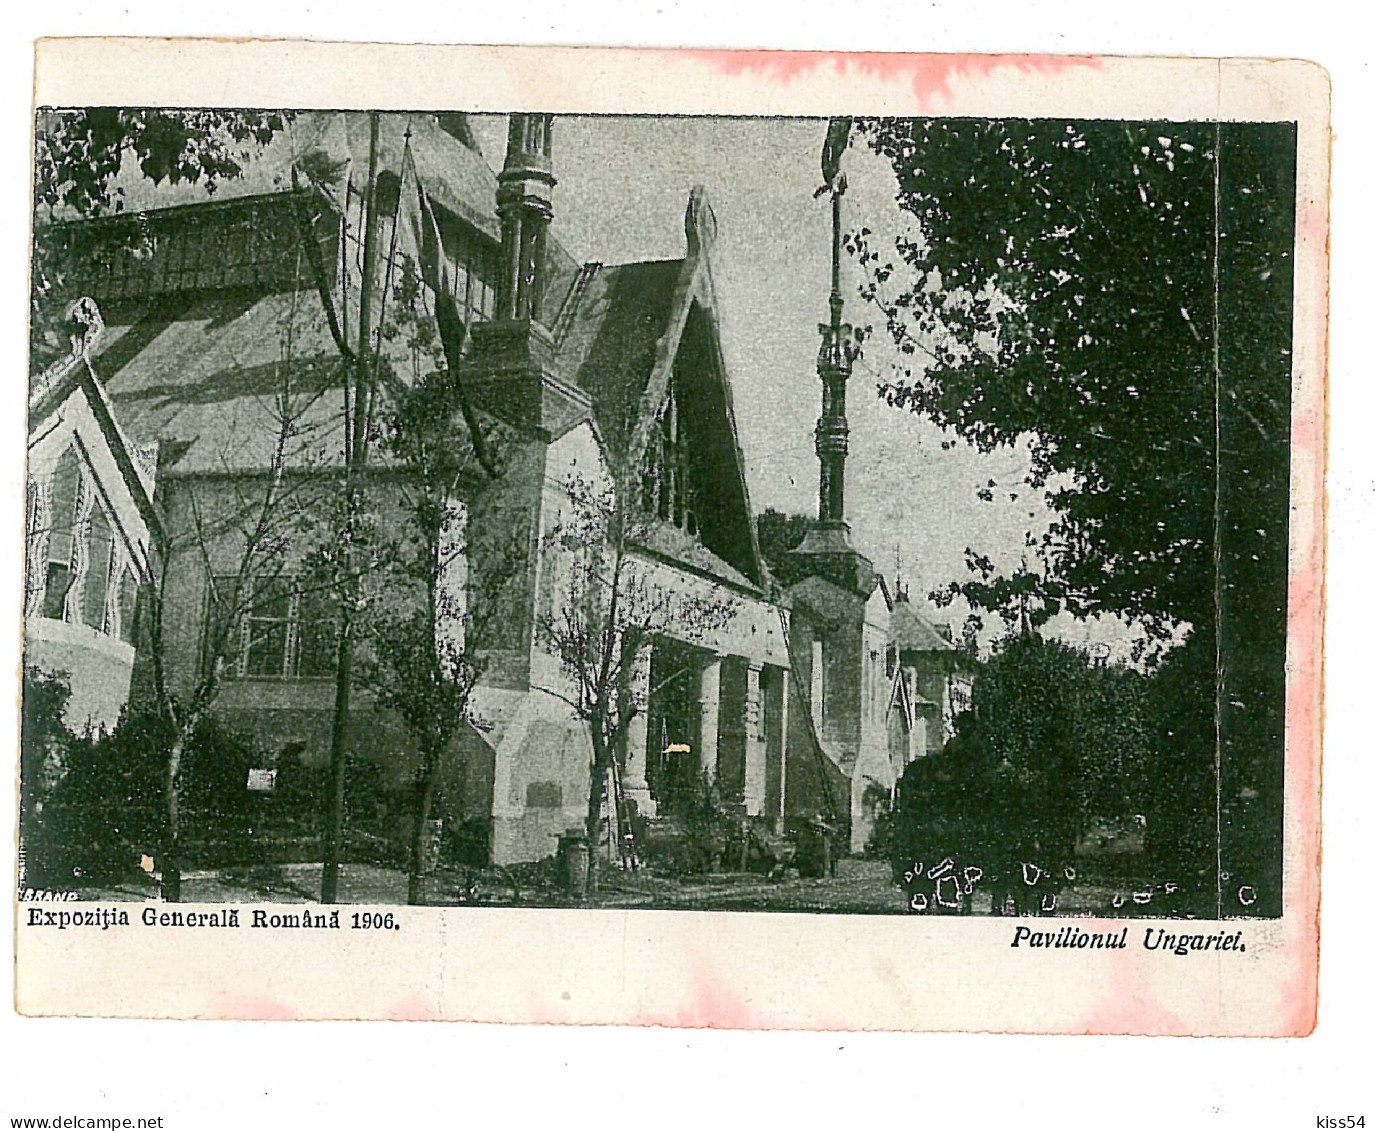 RO 45 - 9047 BUCURESTI, Expozitia Gen. Pavilionul Ungariei, Romania - Old Postcard - Unused - 1906 - Rumänien